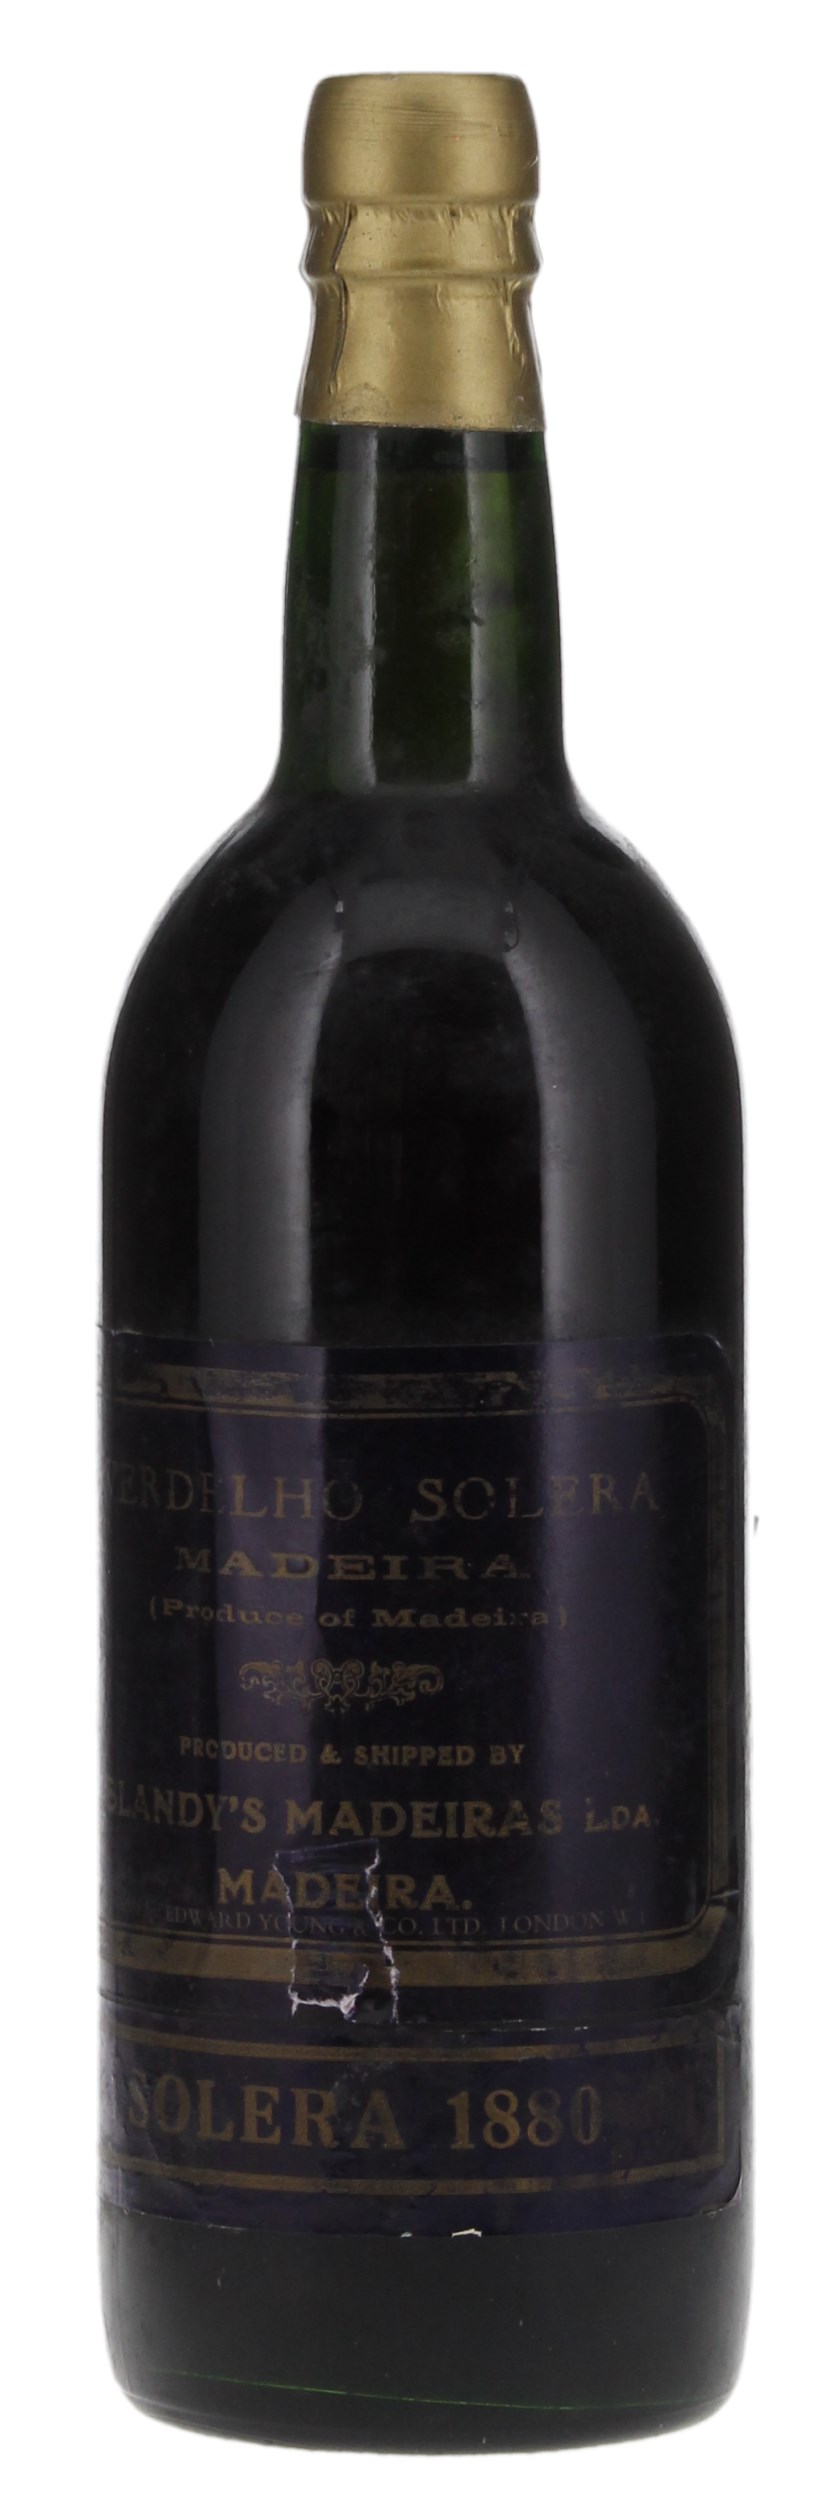 N.V. Blandy's Verdelho Solera 1880 Madeira, 750ml